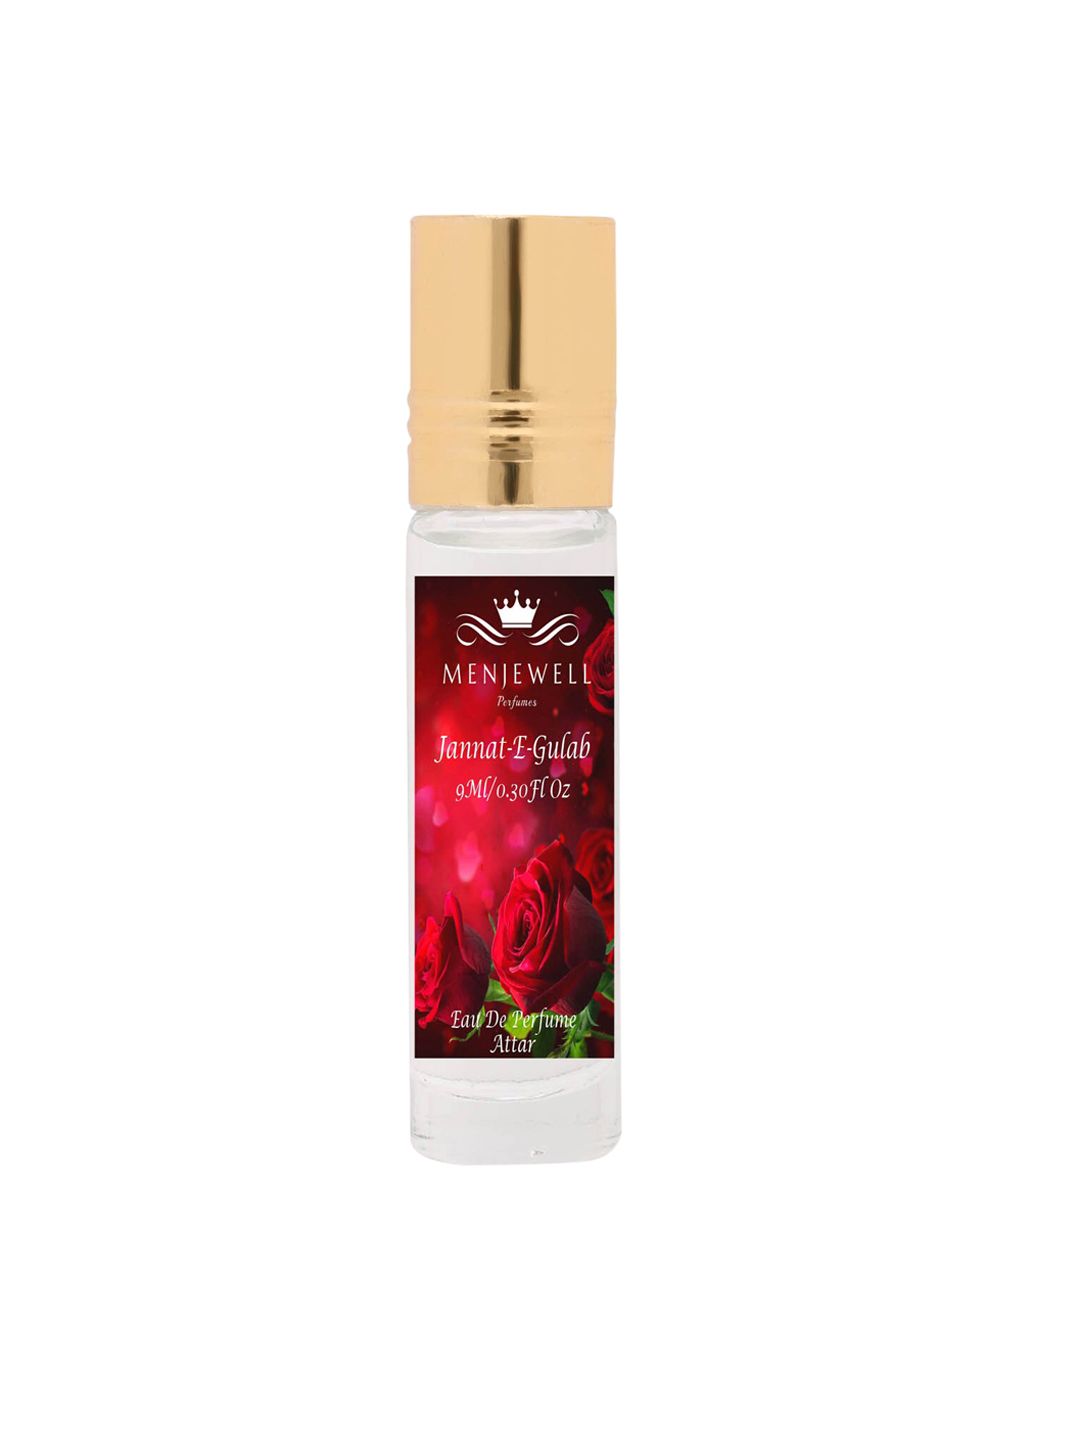 Menjewell Fragrance Jannat-E-Gulab Long Lasting Attar/Perfume 9ml Price in India